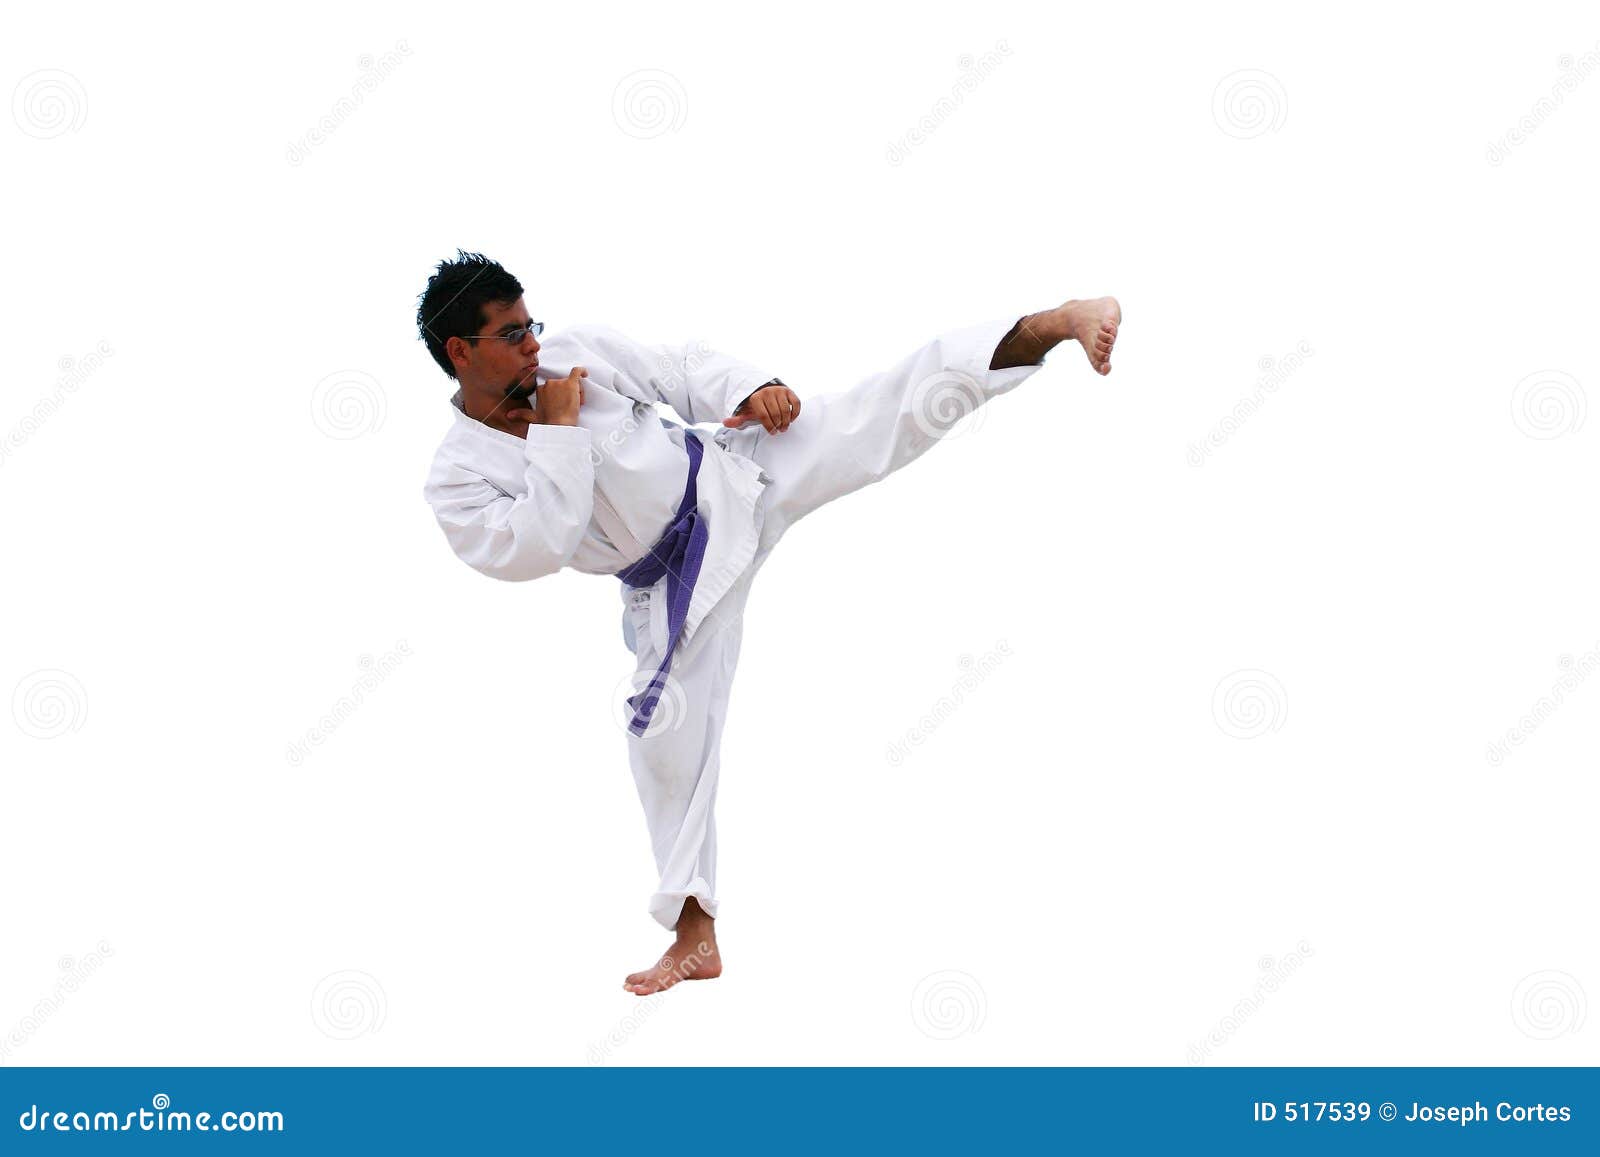 martial art side kick